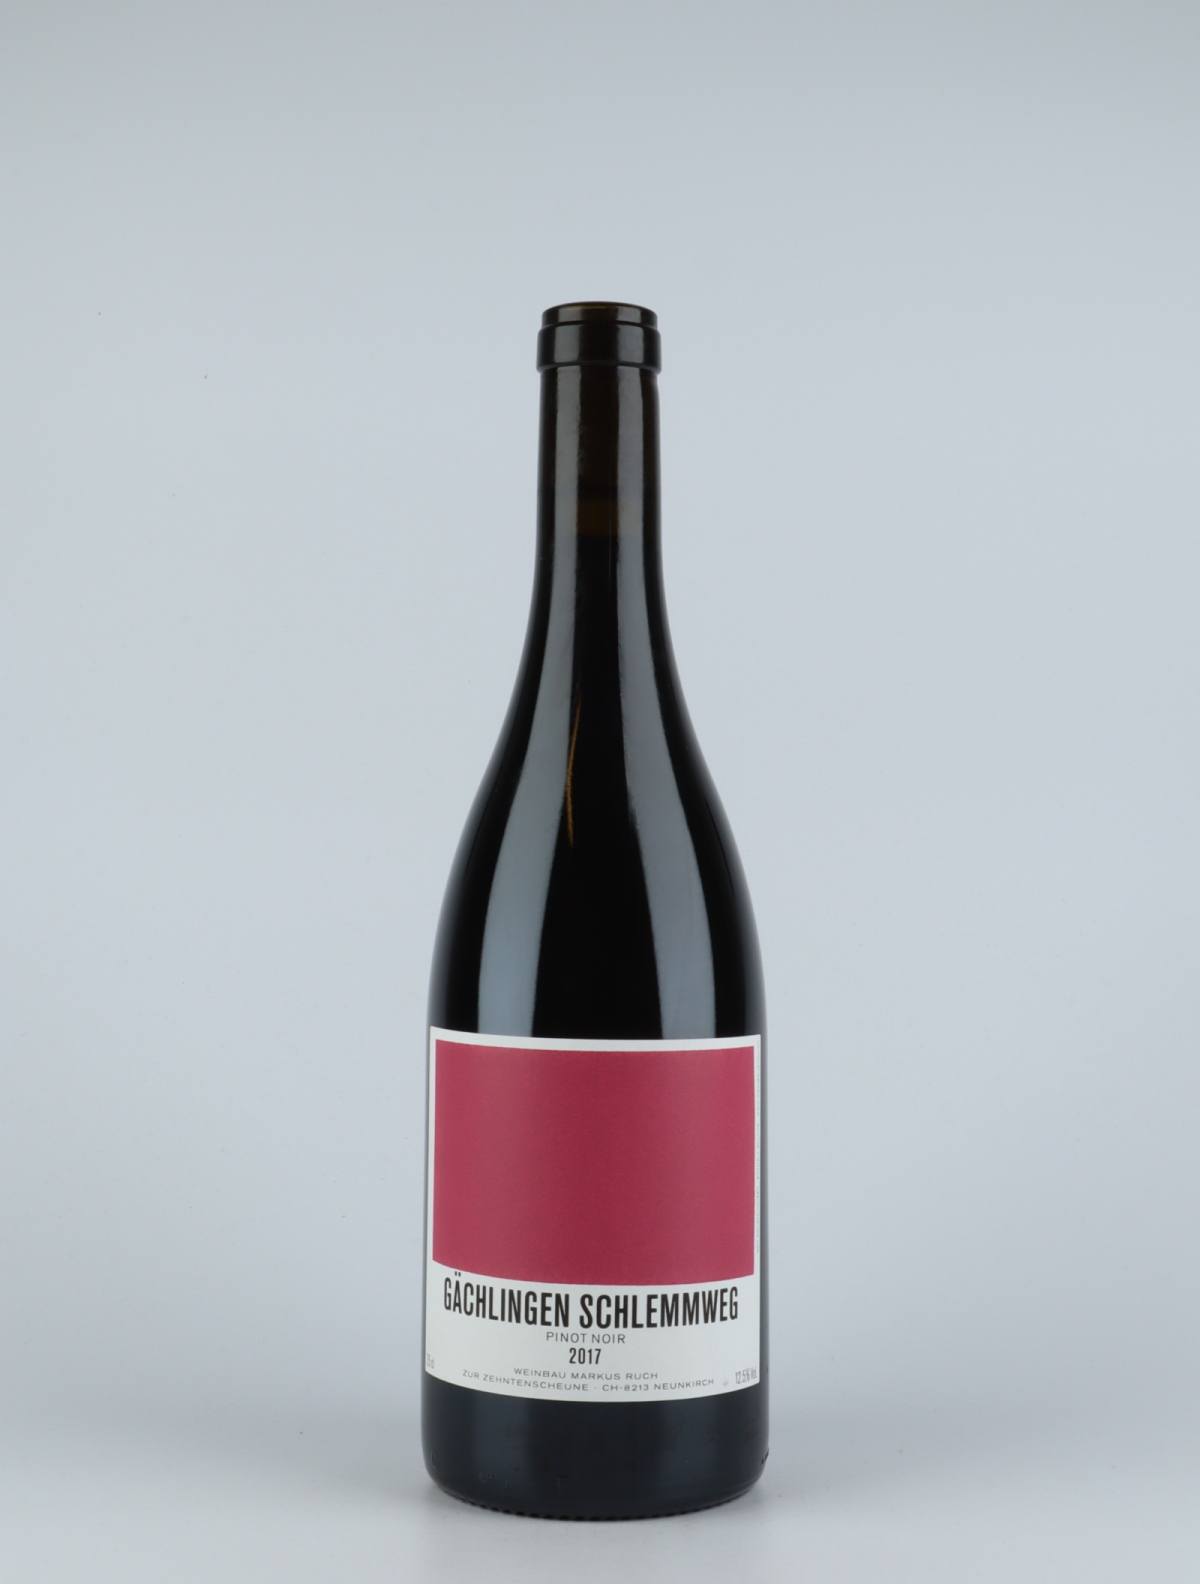 En flaske 2017 Gächlingen Schlemmweg Rødvin fra Markus Ruch, Schaffhausen i Schweiz